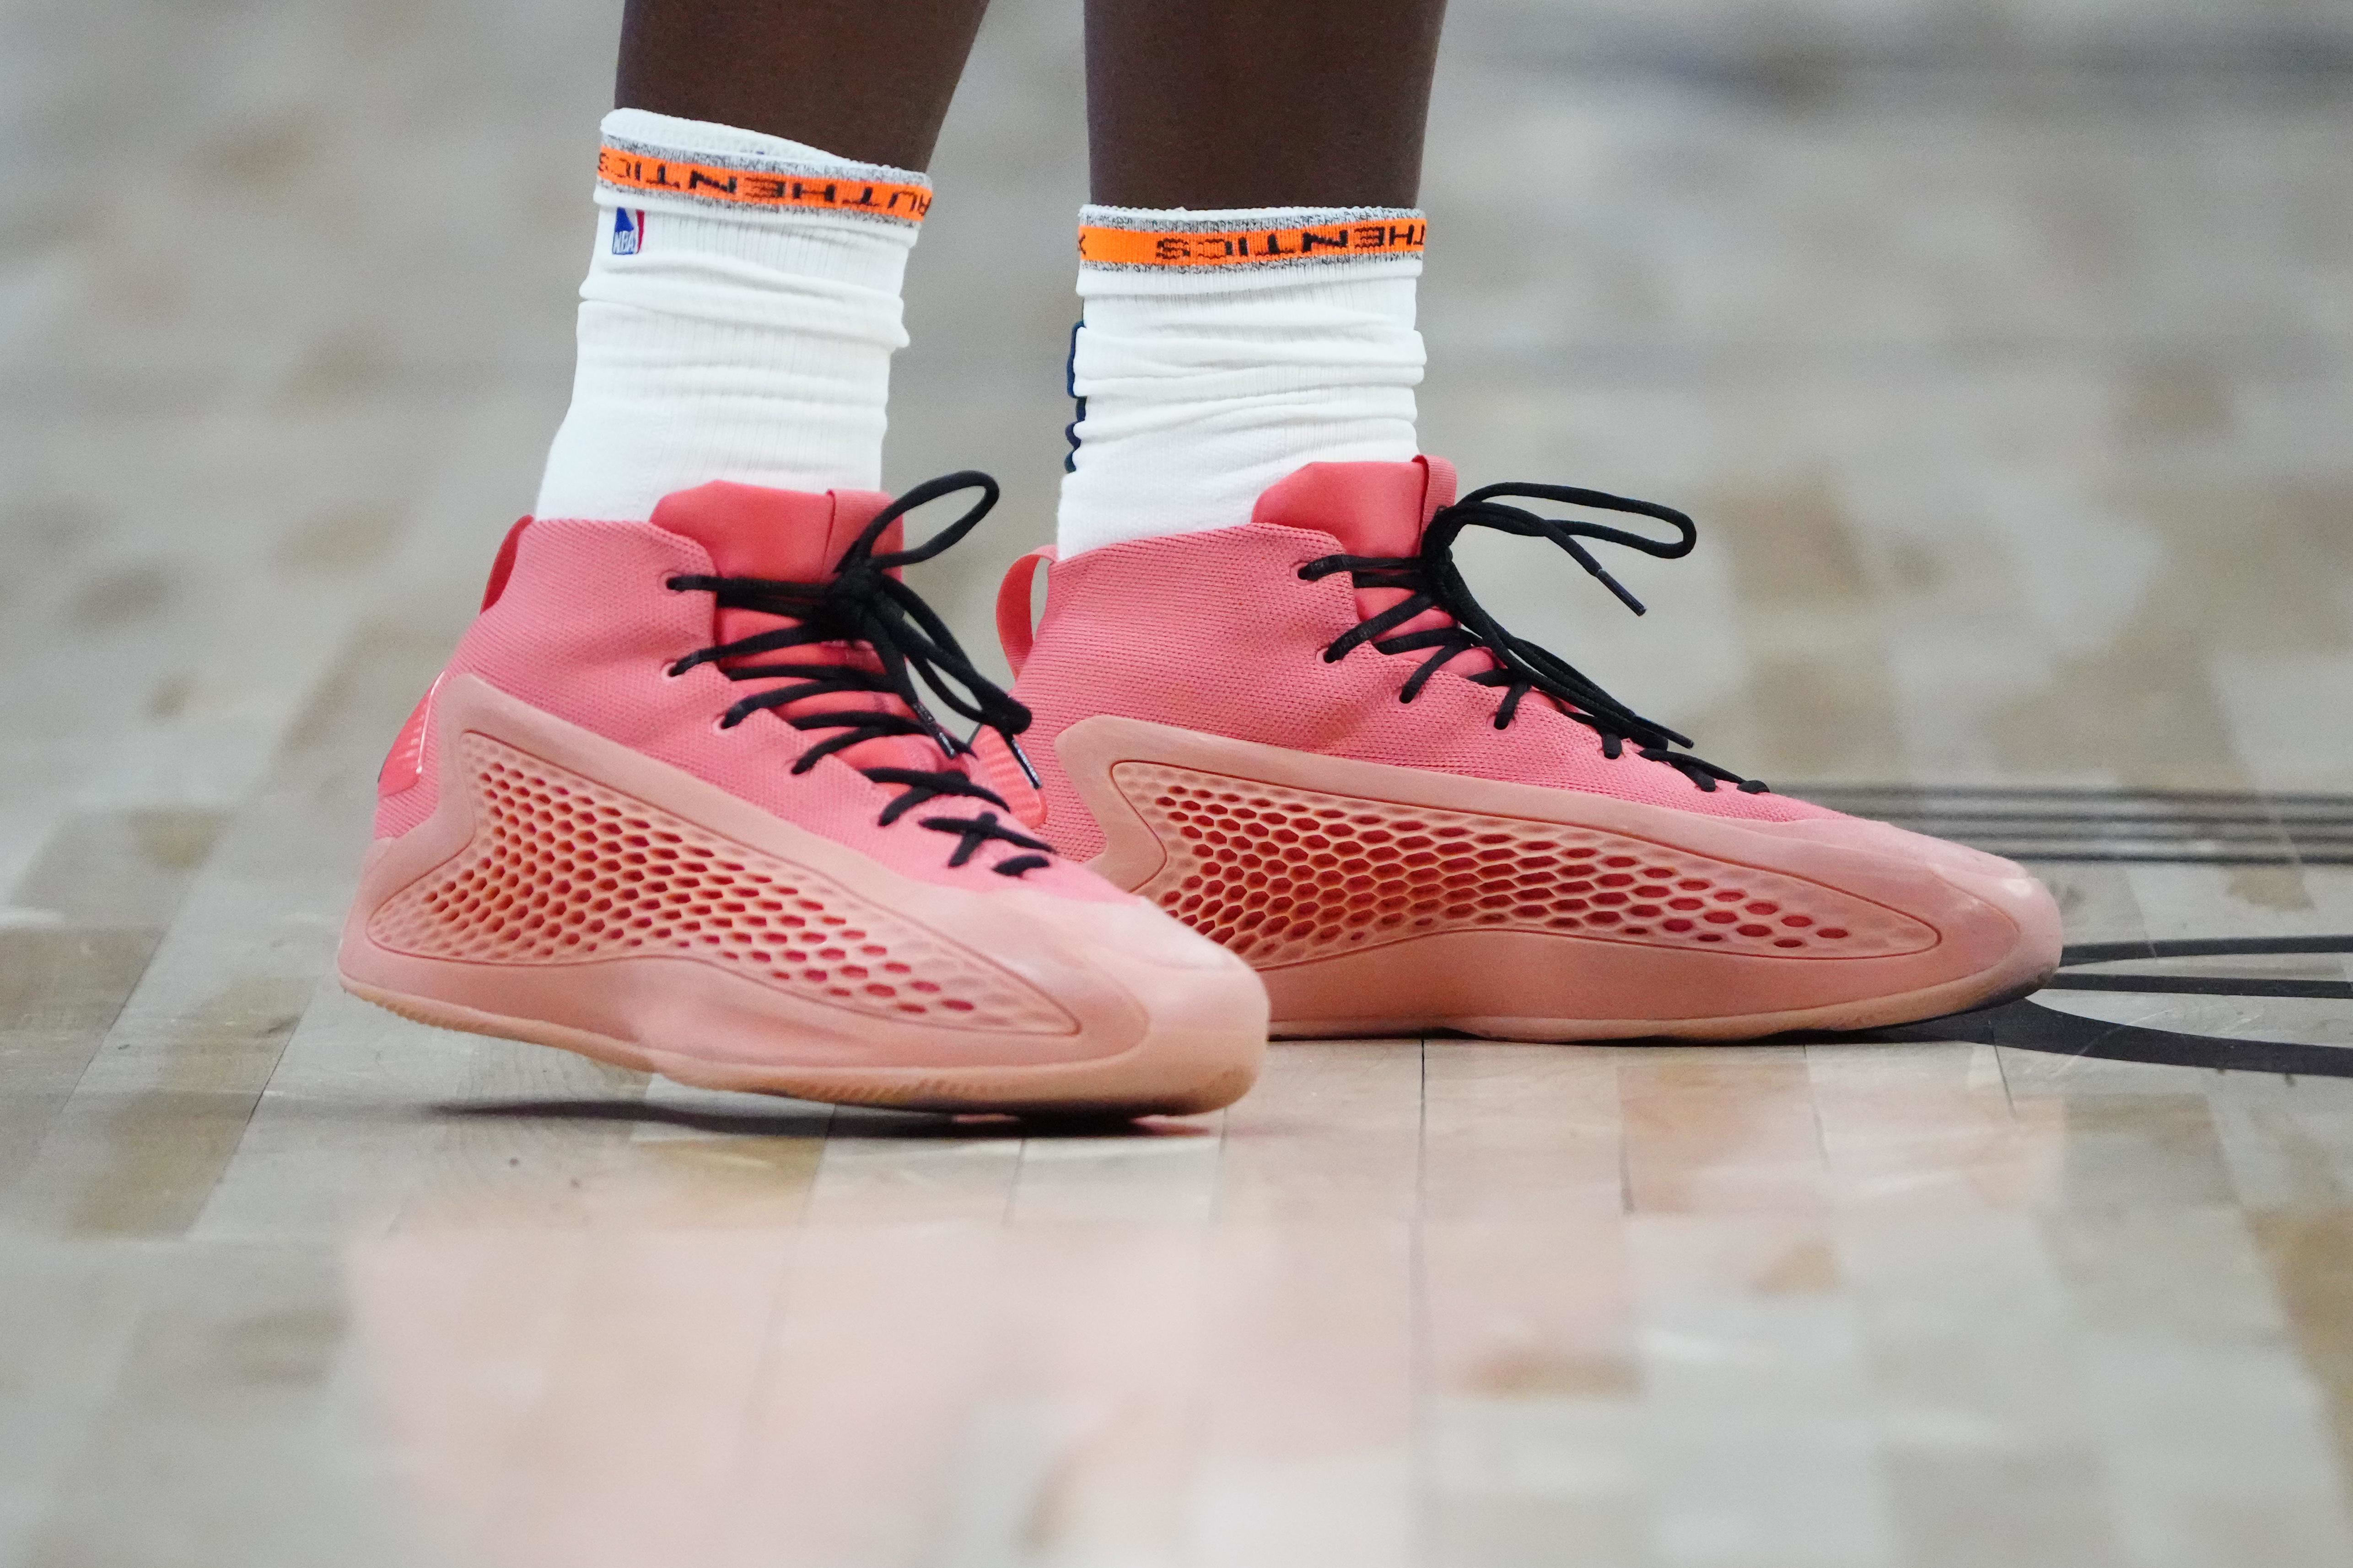 Minnesota Timberwolves guard Anthony Edwards' pink adidas sneakers.